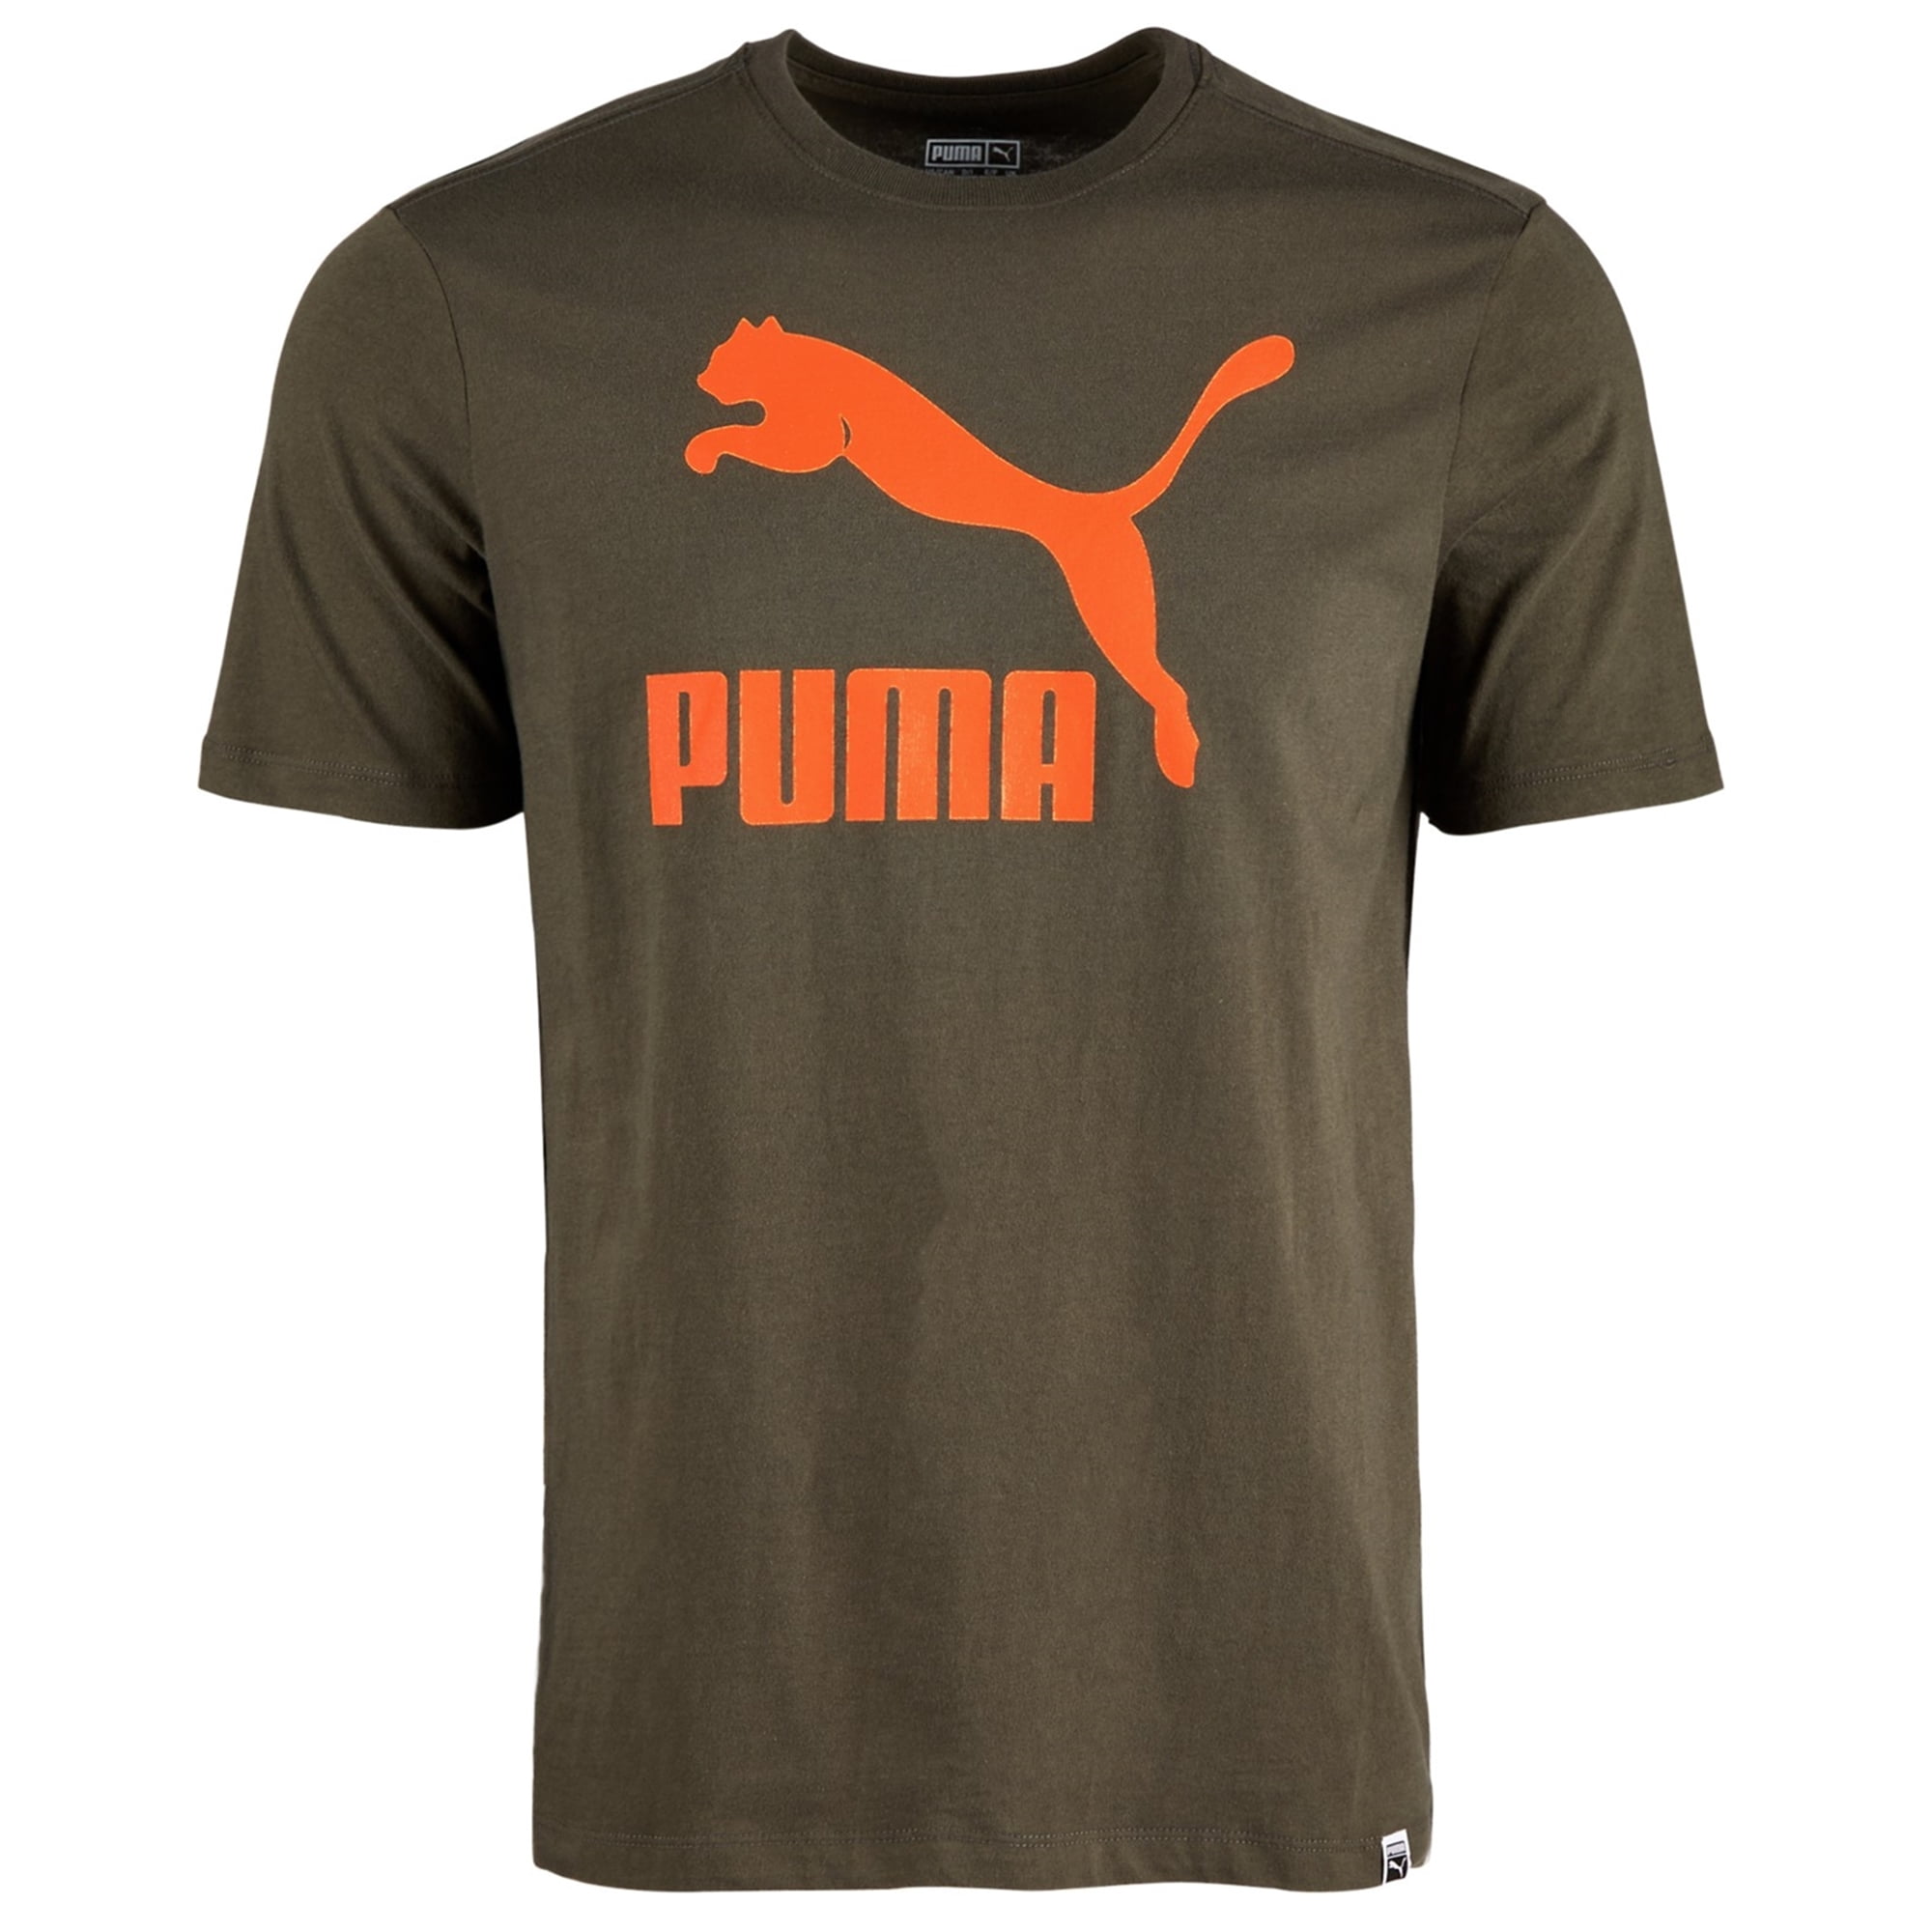 PUMA - Puma Mens Archive Graphic T-Shirt, Green, Small - Walmart.com ...